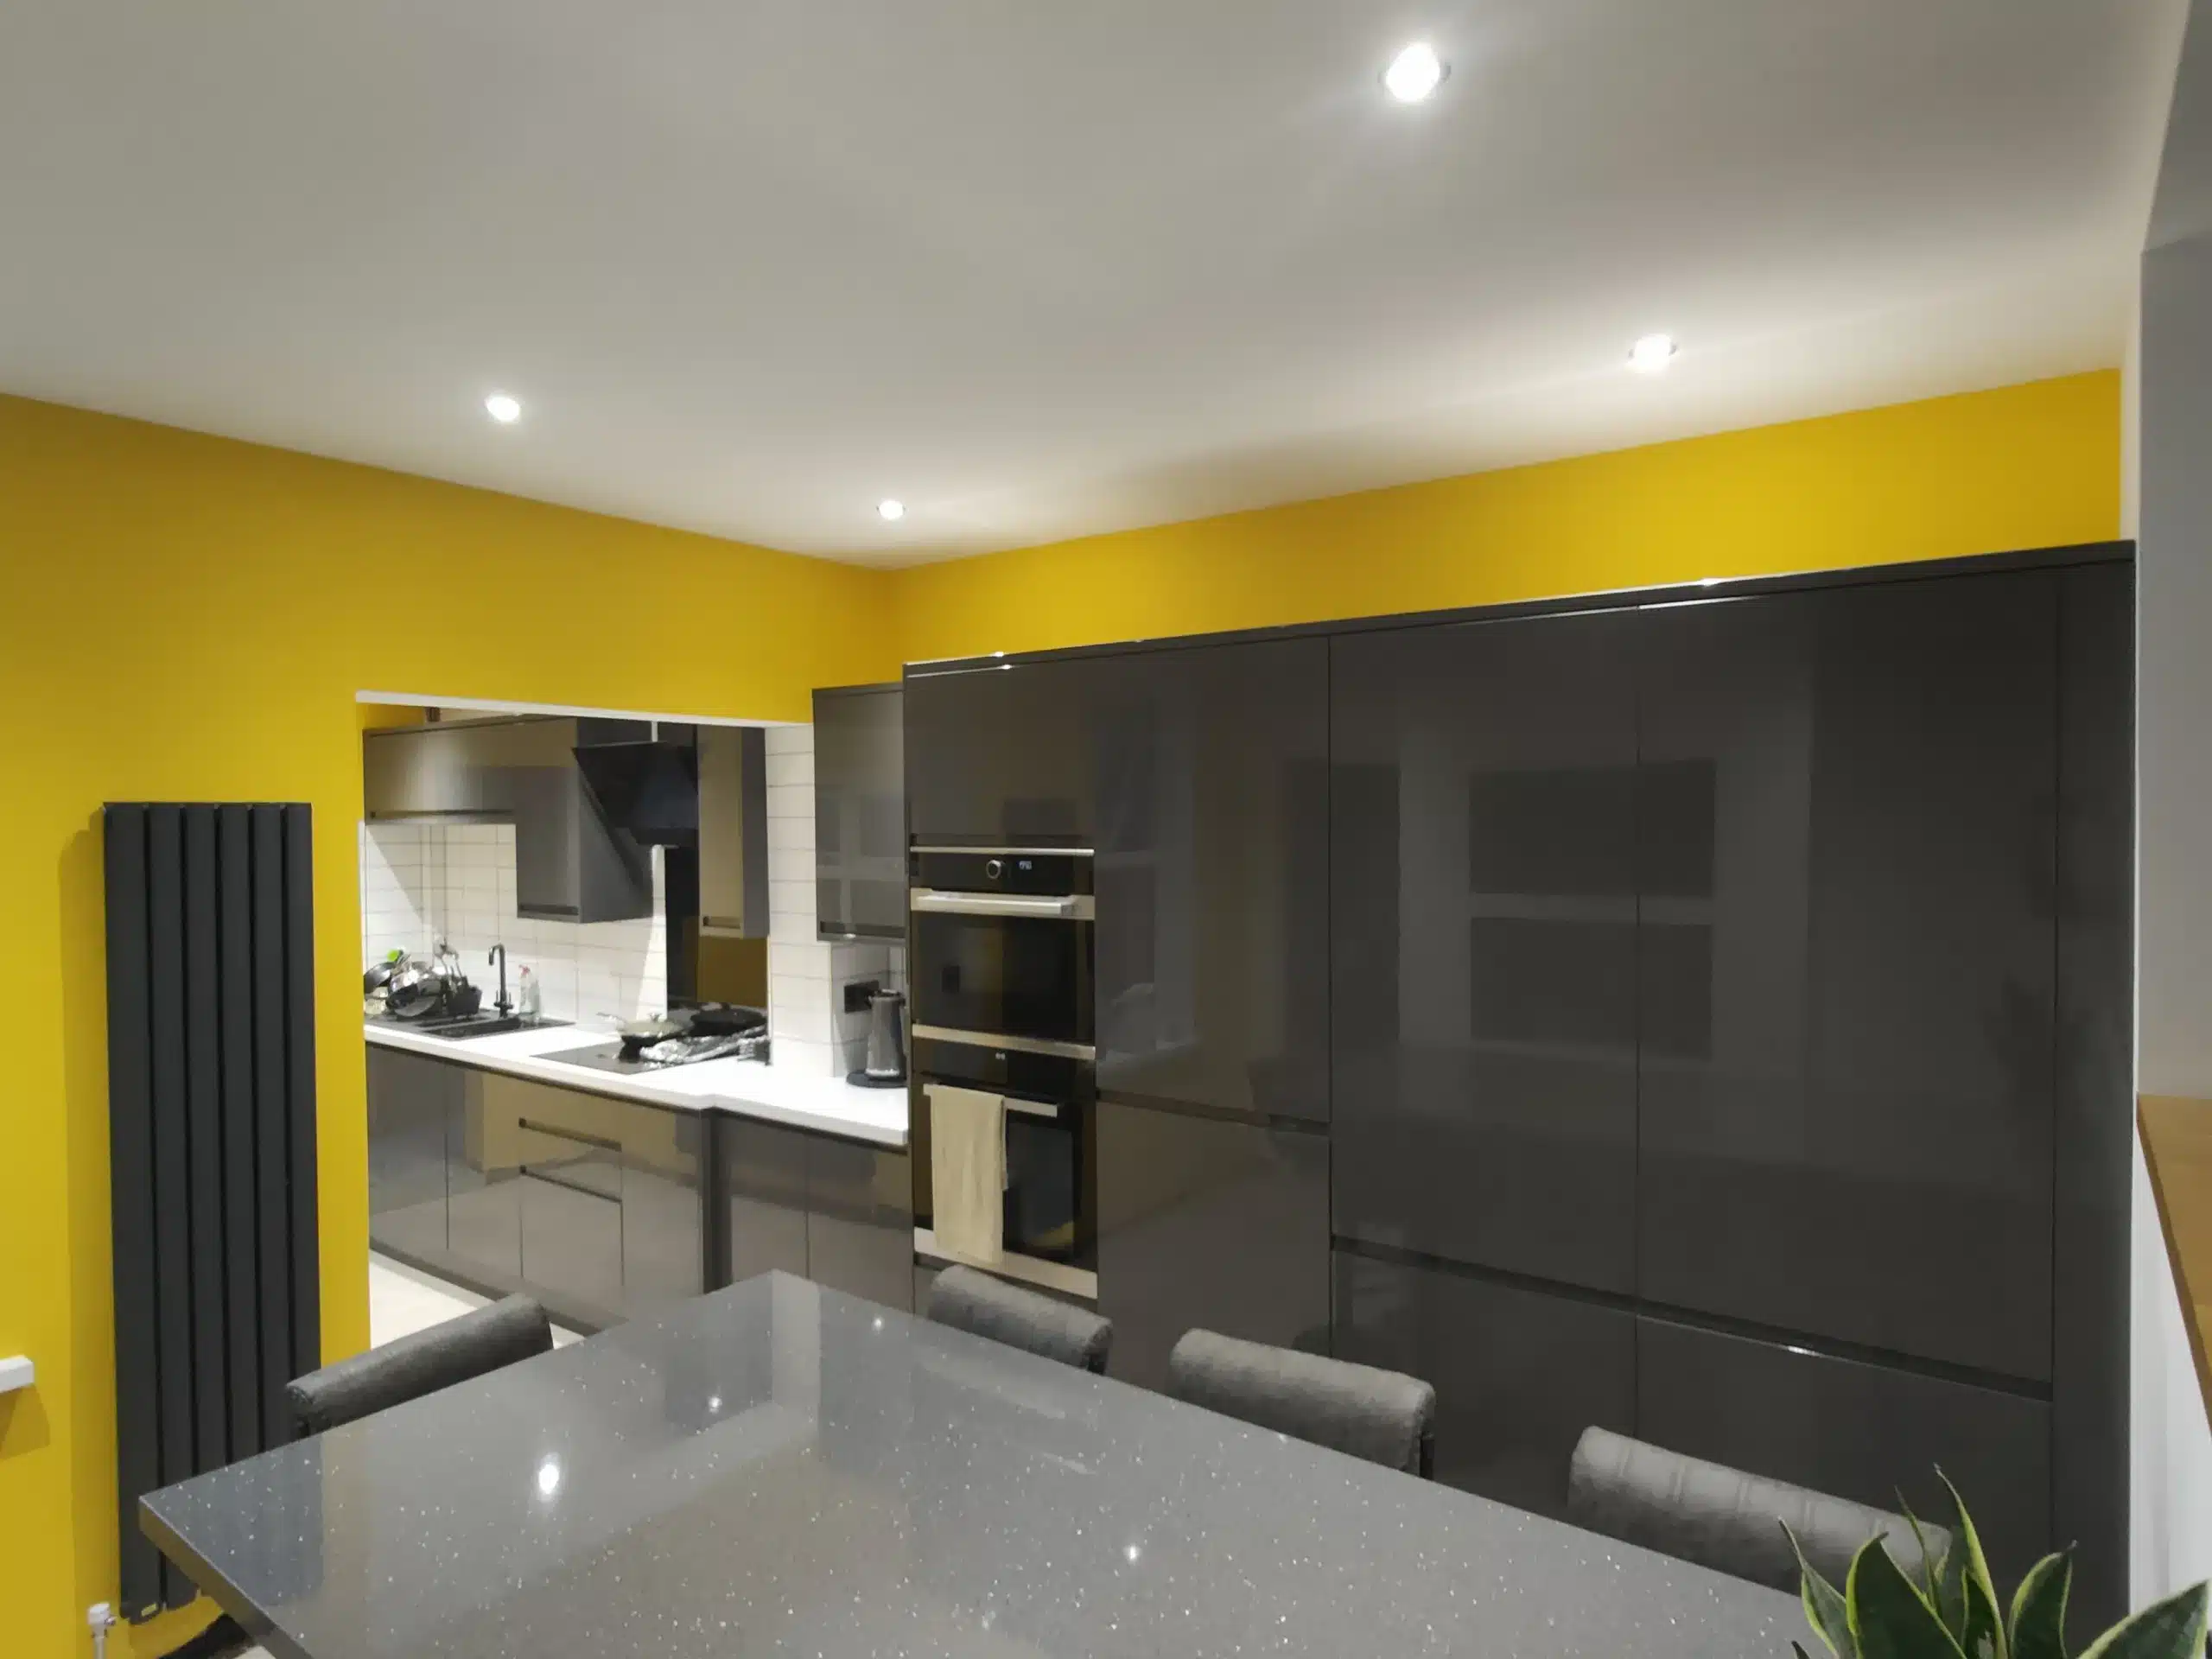 Home refurbishment page image showcasing a kitchen remodel